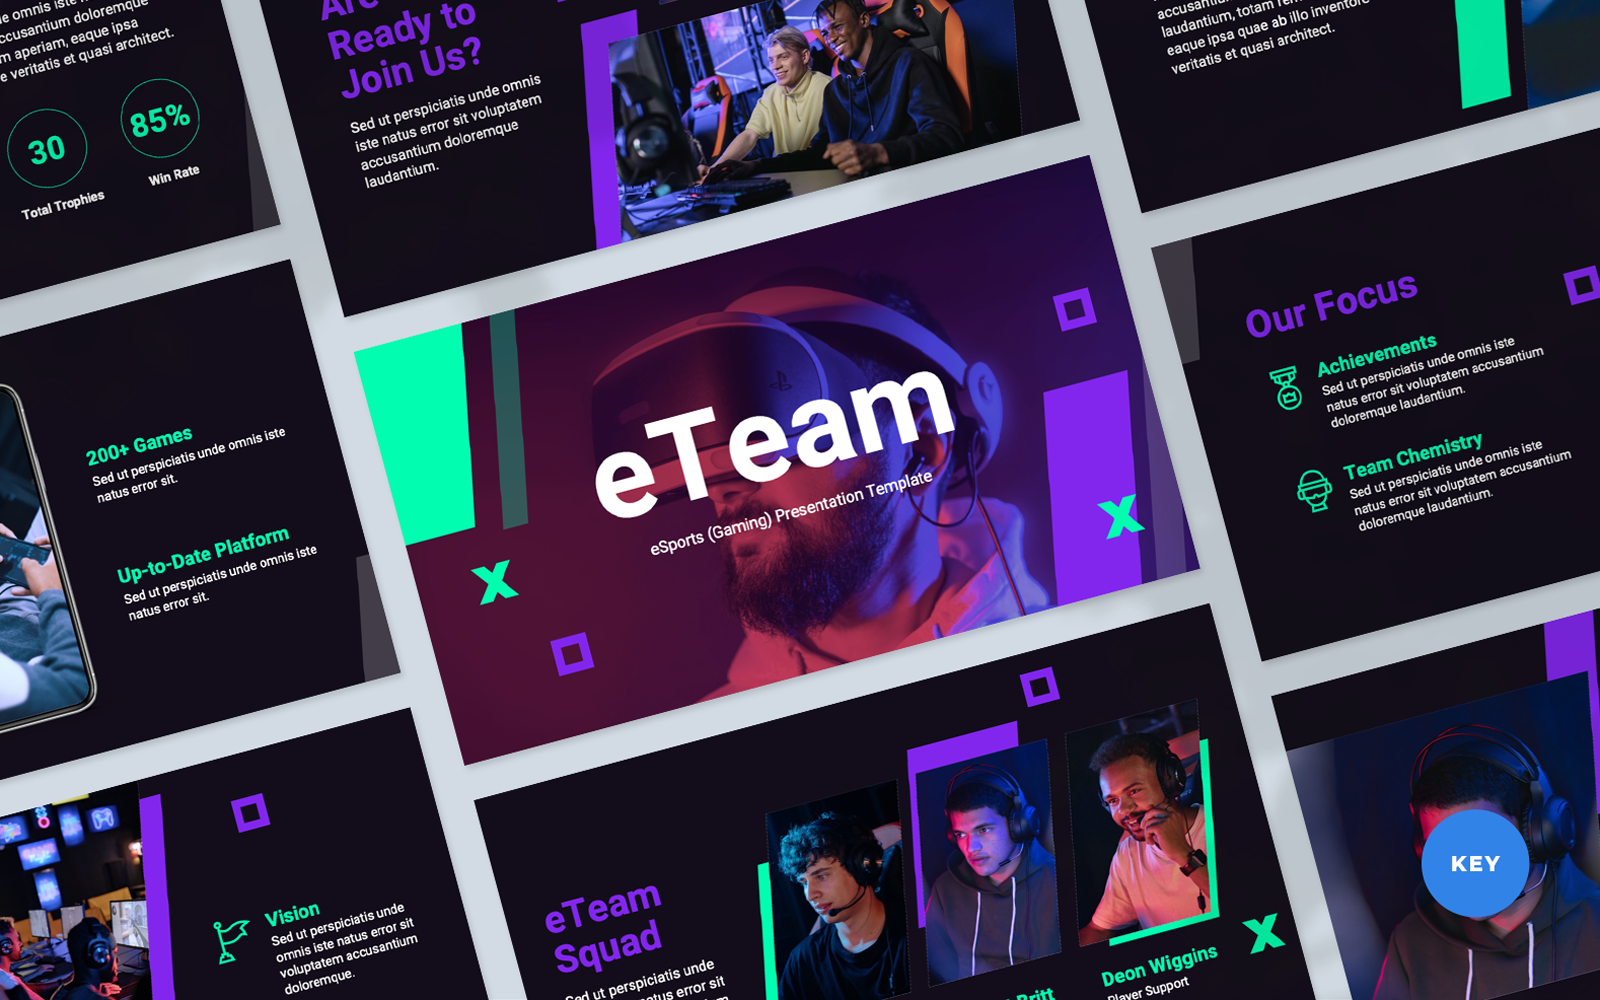 eTeam - eSports (Gaming) Presentation Keynote Template